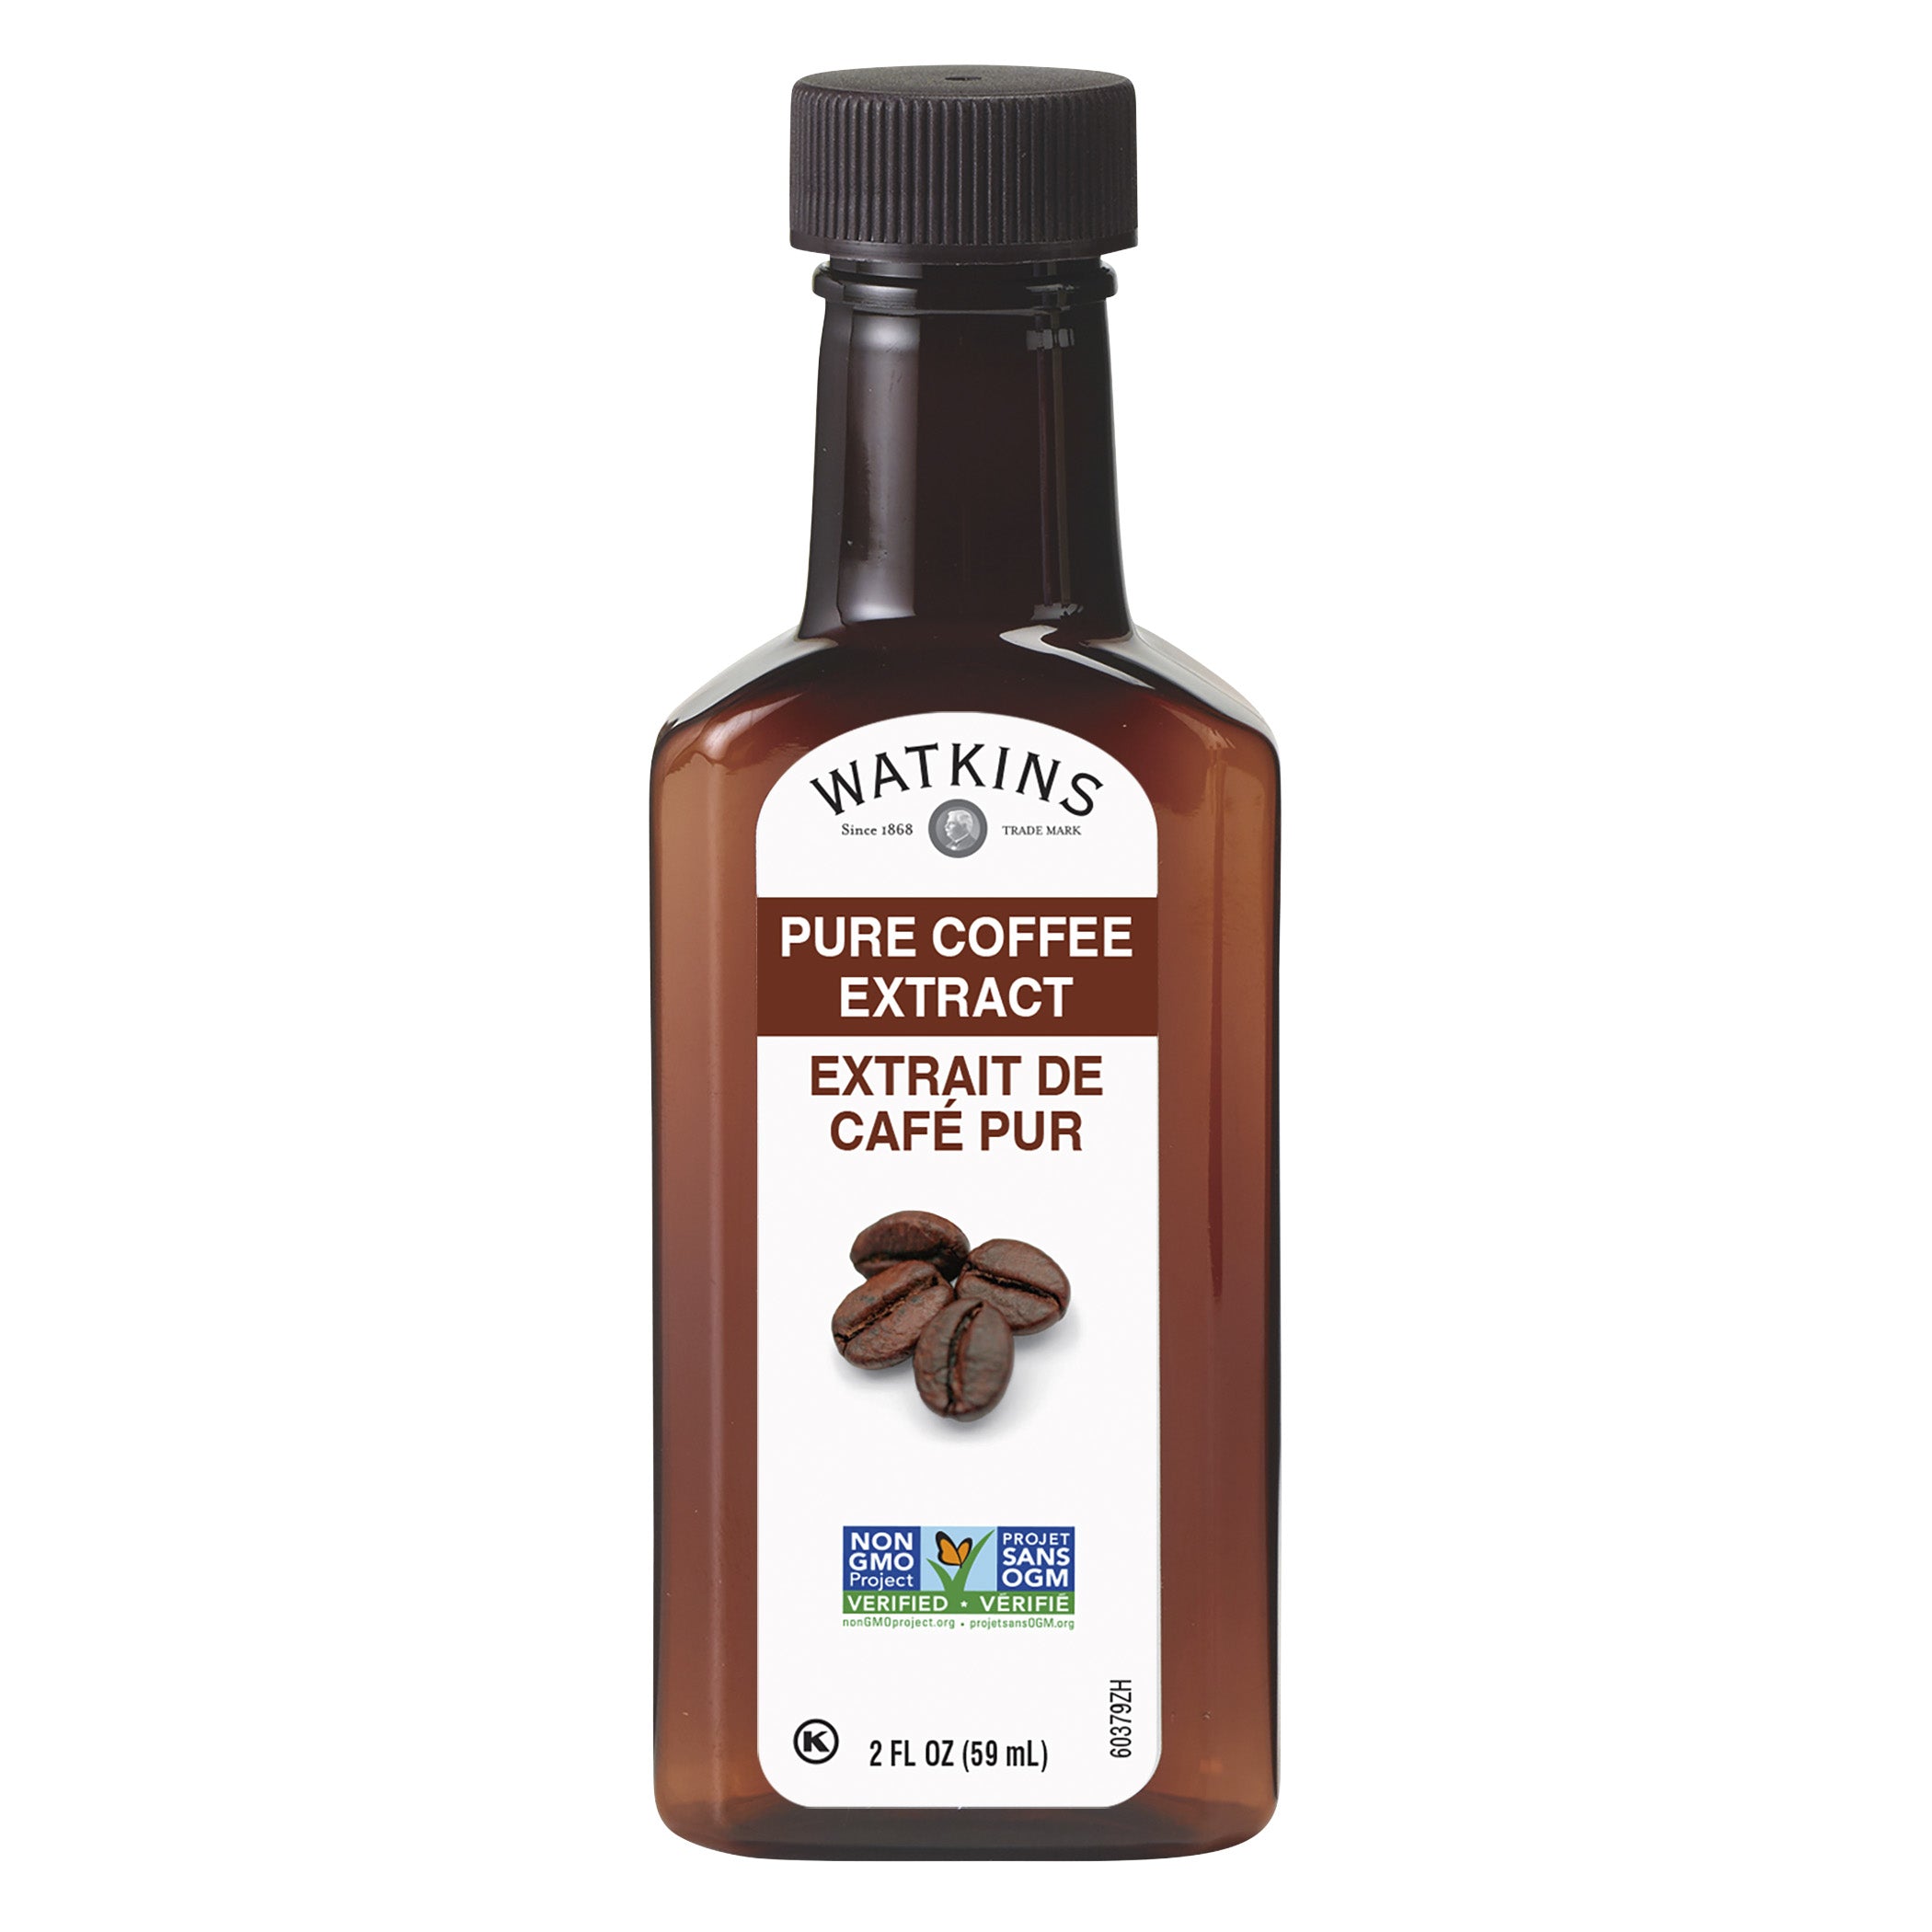 Watkins Pure Coffee Extract